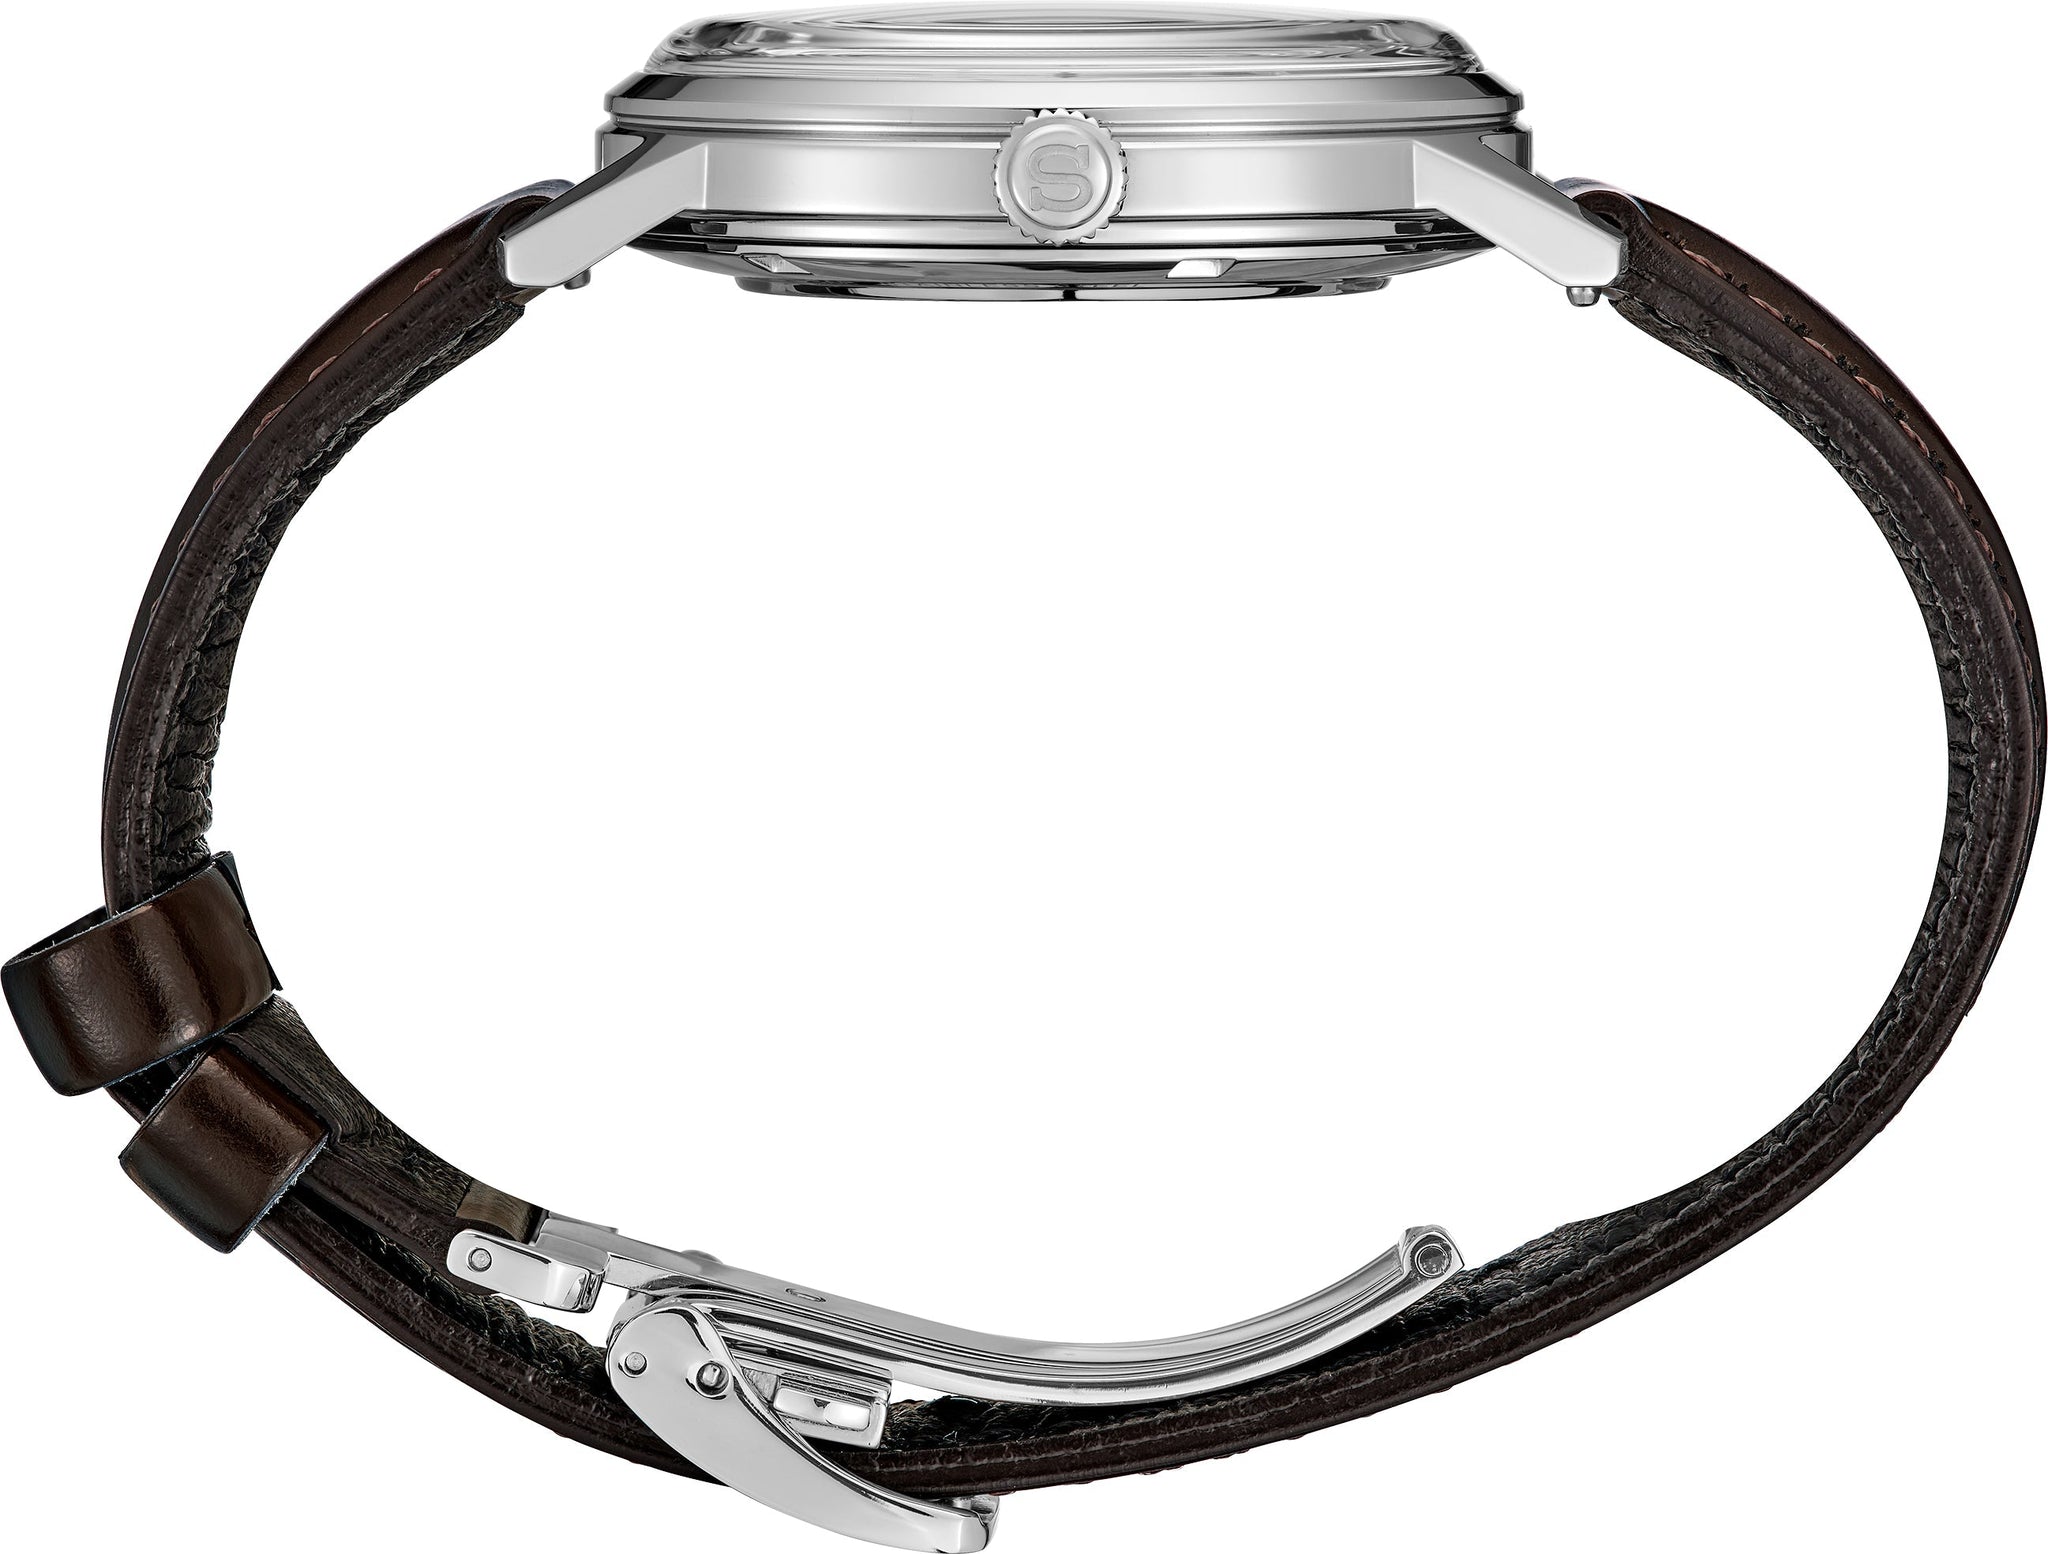 Seiko Presage Automatic Men's Watch SRPJ17 - Obsessions Jewellery